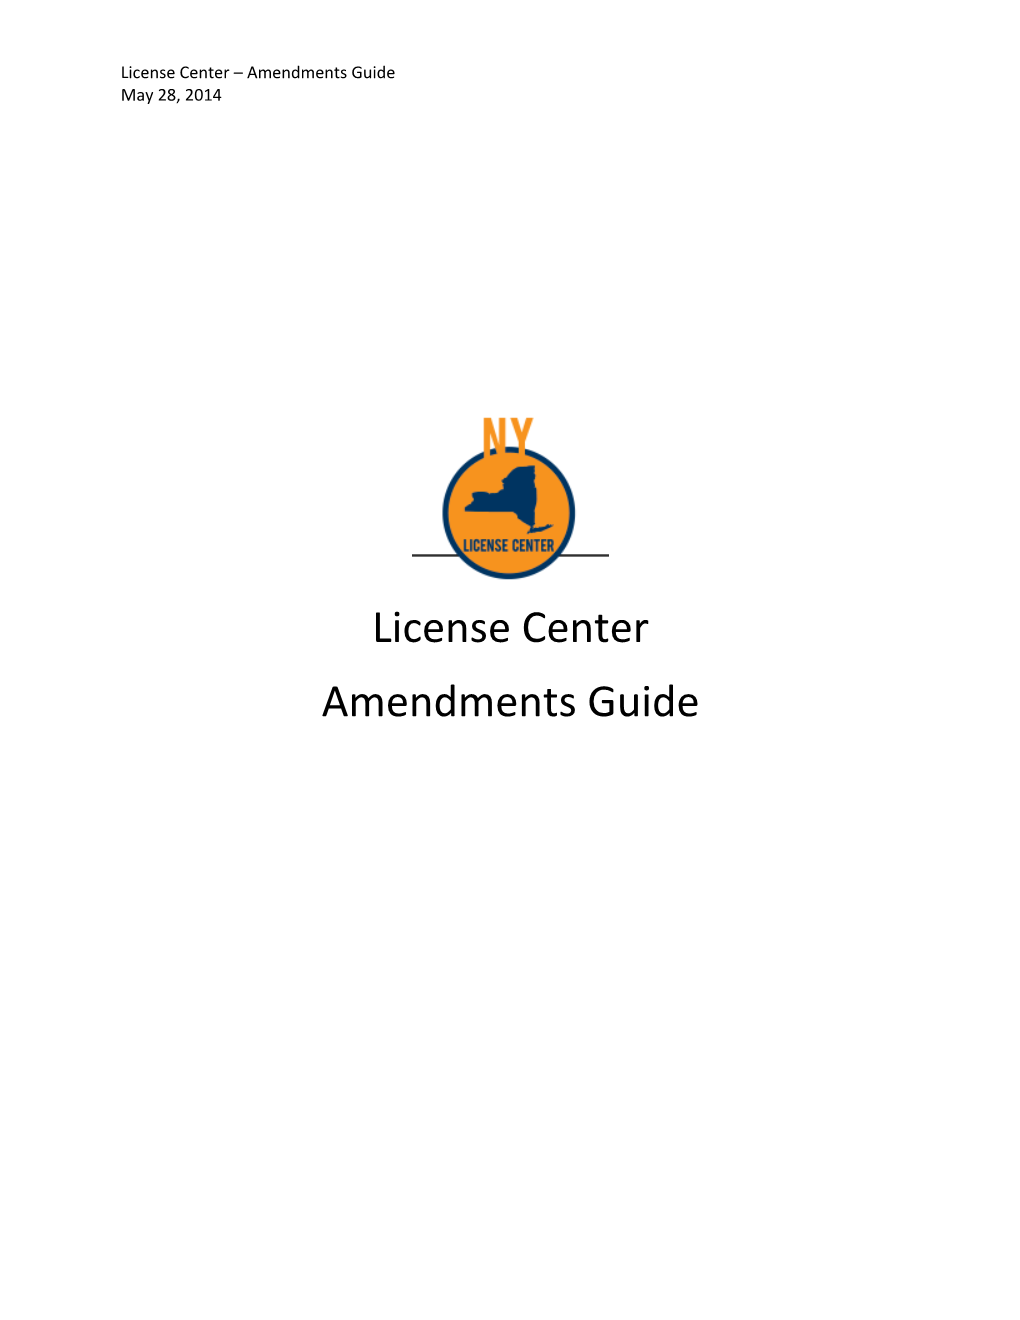 License Center Amendments Guide